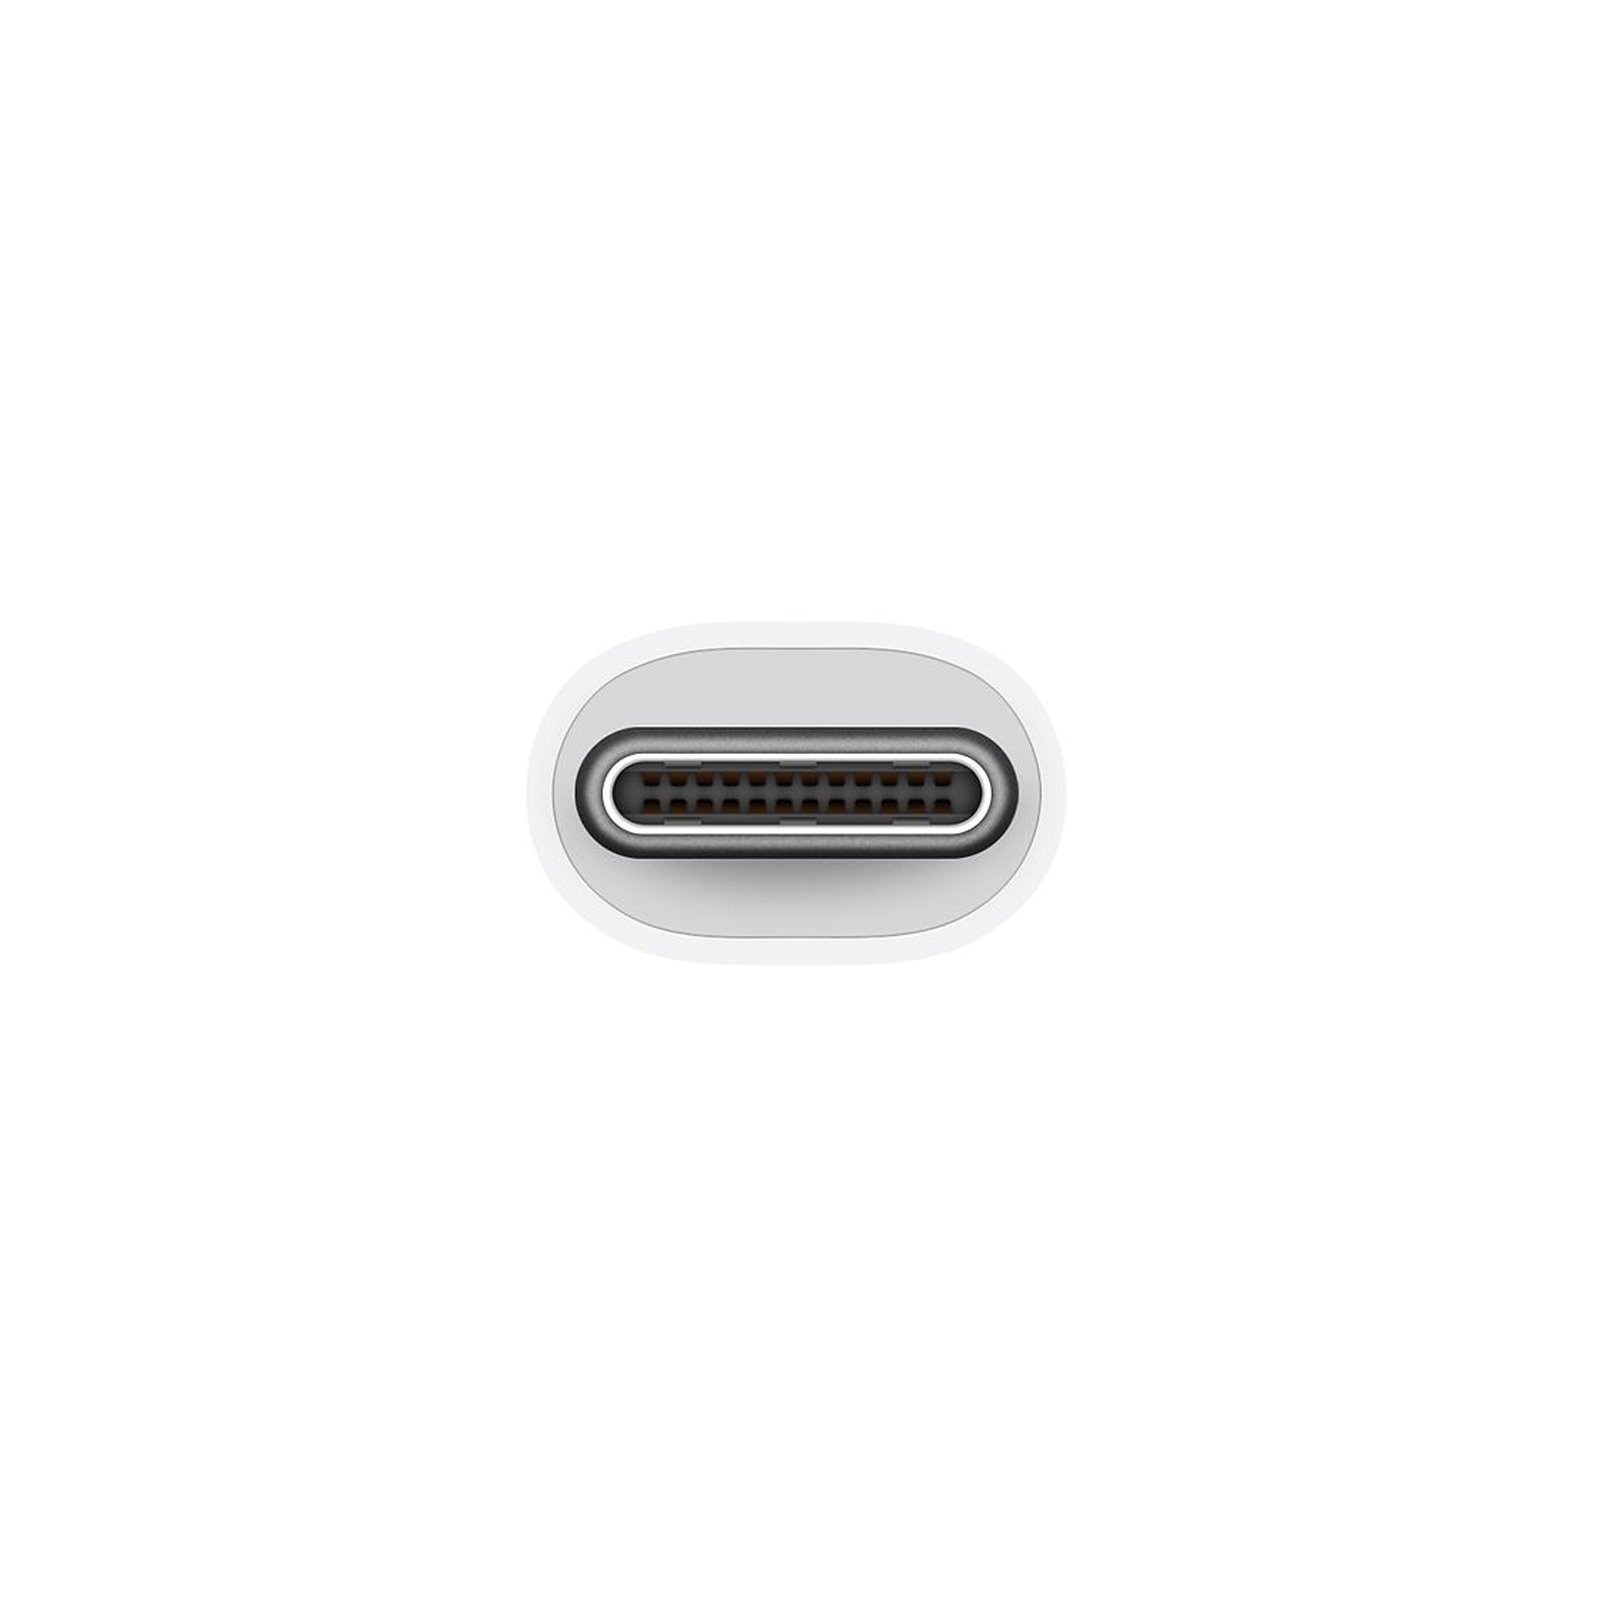 Порт-репликатор Apple USB-C to Digital AV Multiport Adapter, Model A2119 (MUF82ZM/A) изображение 2